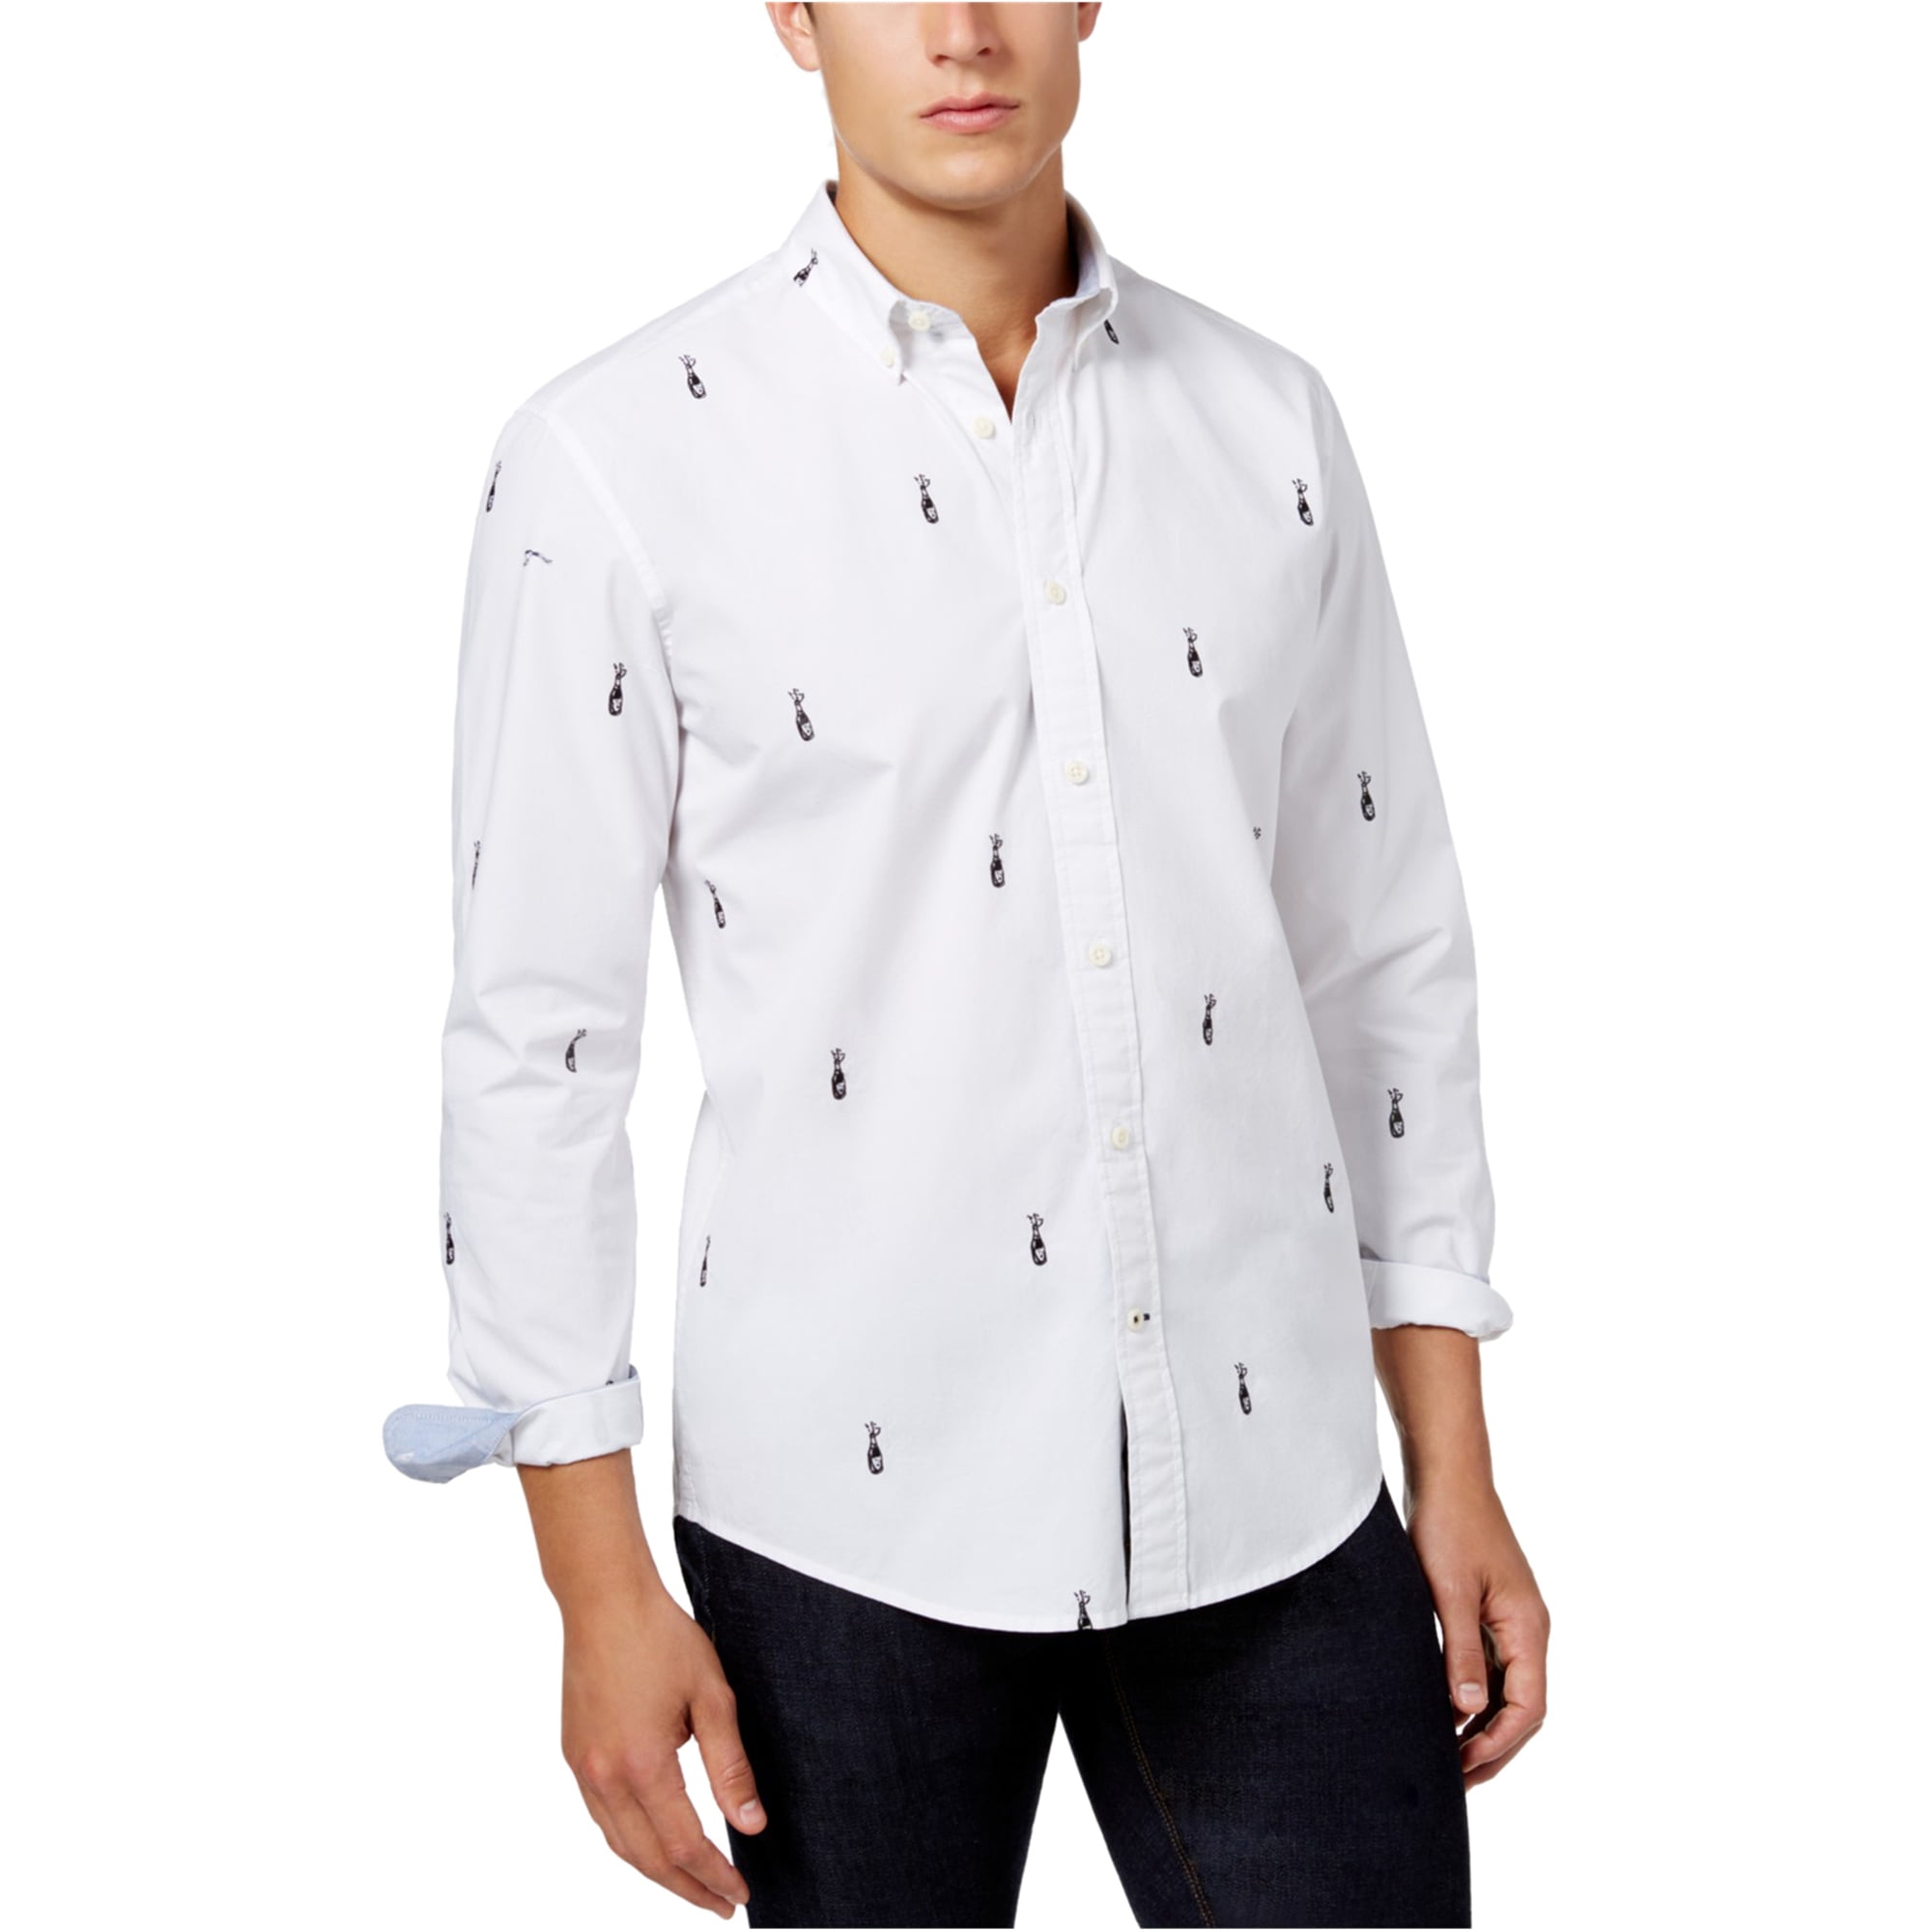 TOMMY HILFIGER NEW Men's100% Cotton Button Down Custom Fit Woven Shirt Multi 